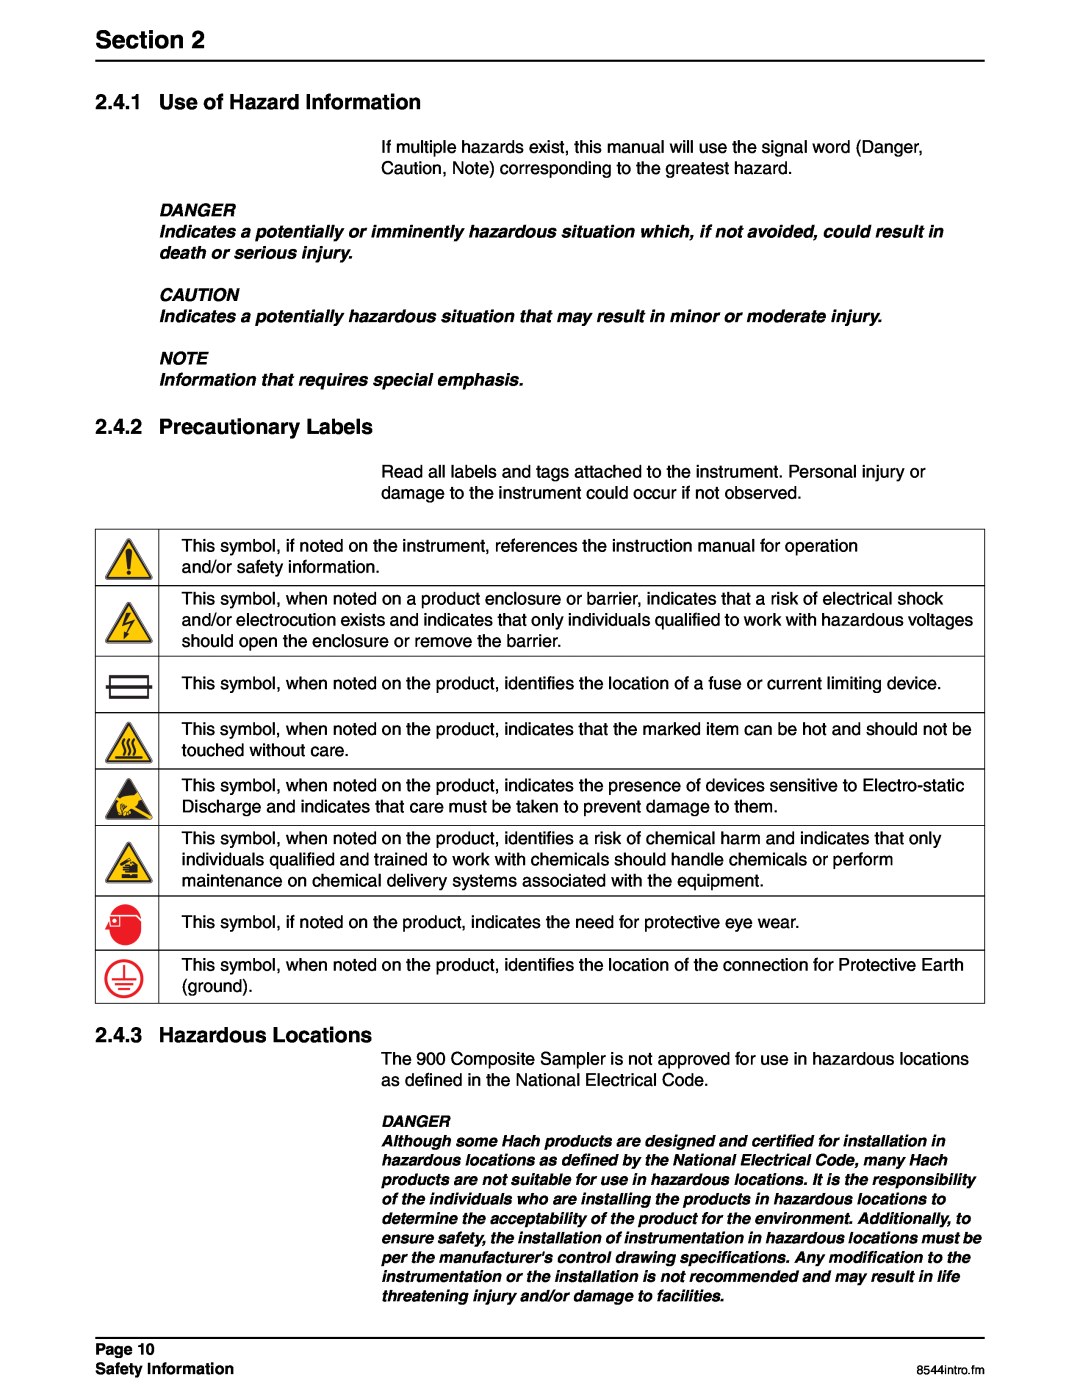 Hach 900 manual Use of Hazard Information, Precautionary Labels, Hazardous Locations, Section, Danger 